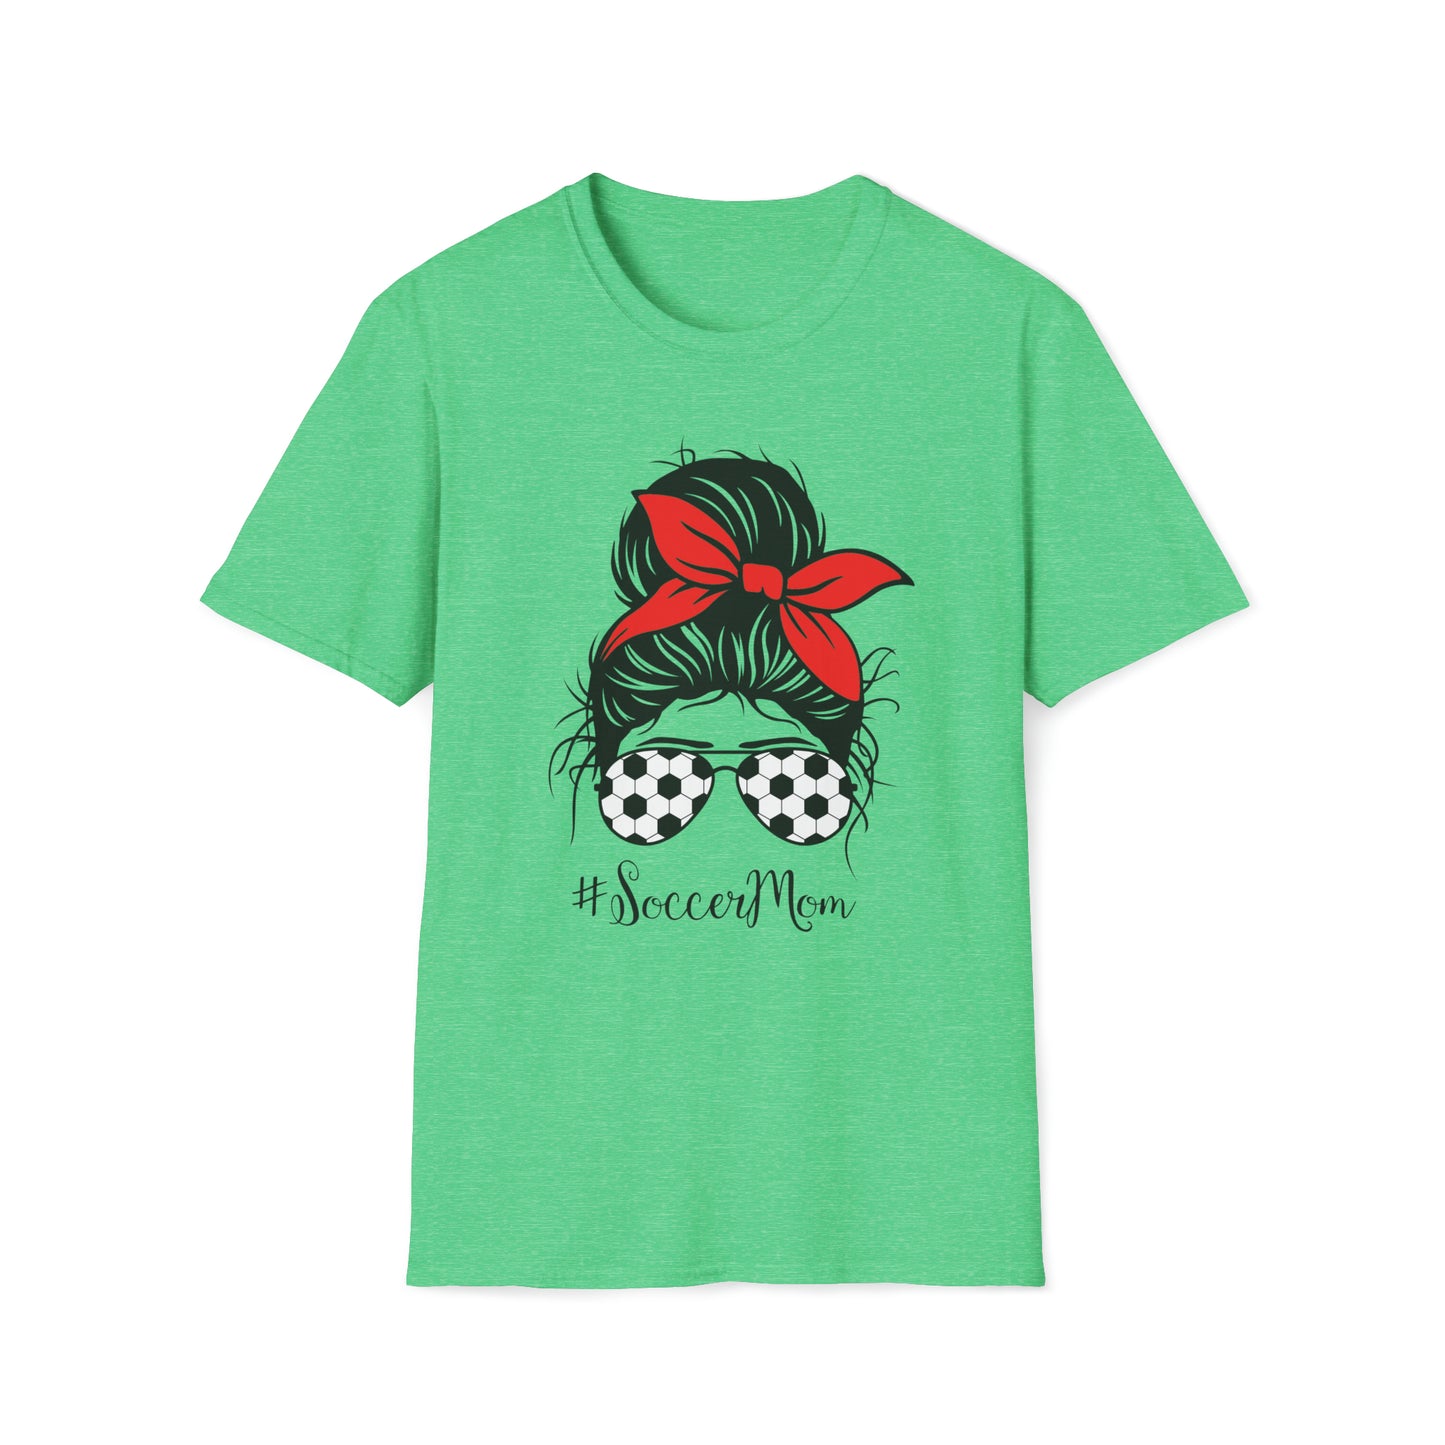 Soccer Mom - Unisex Softstyle T-Shirt